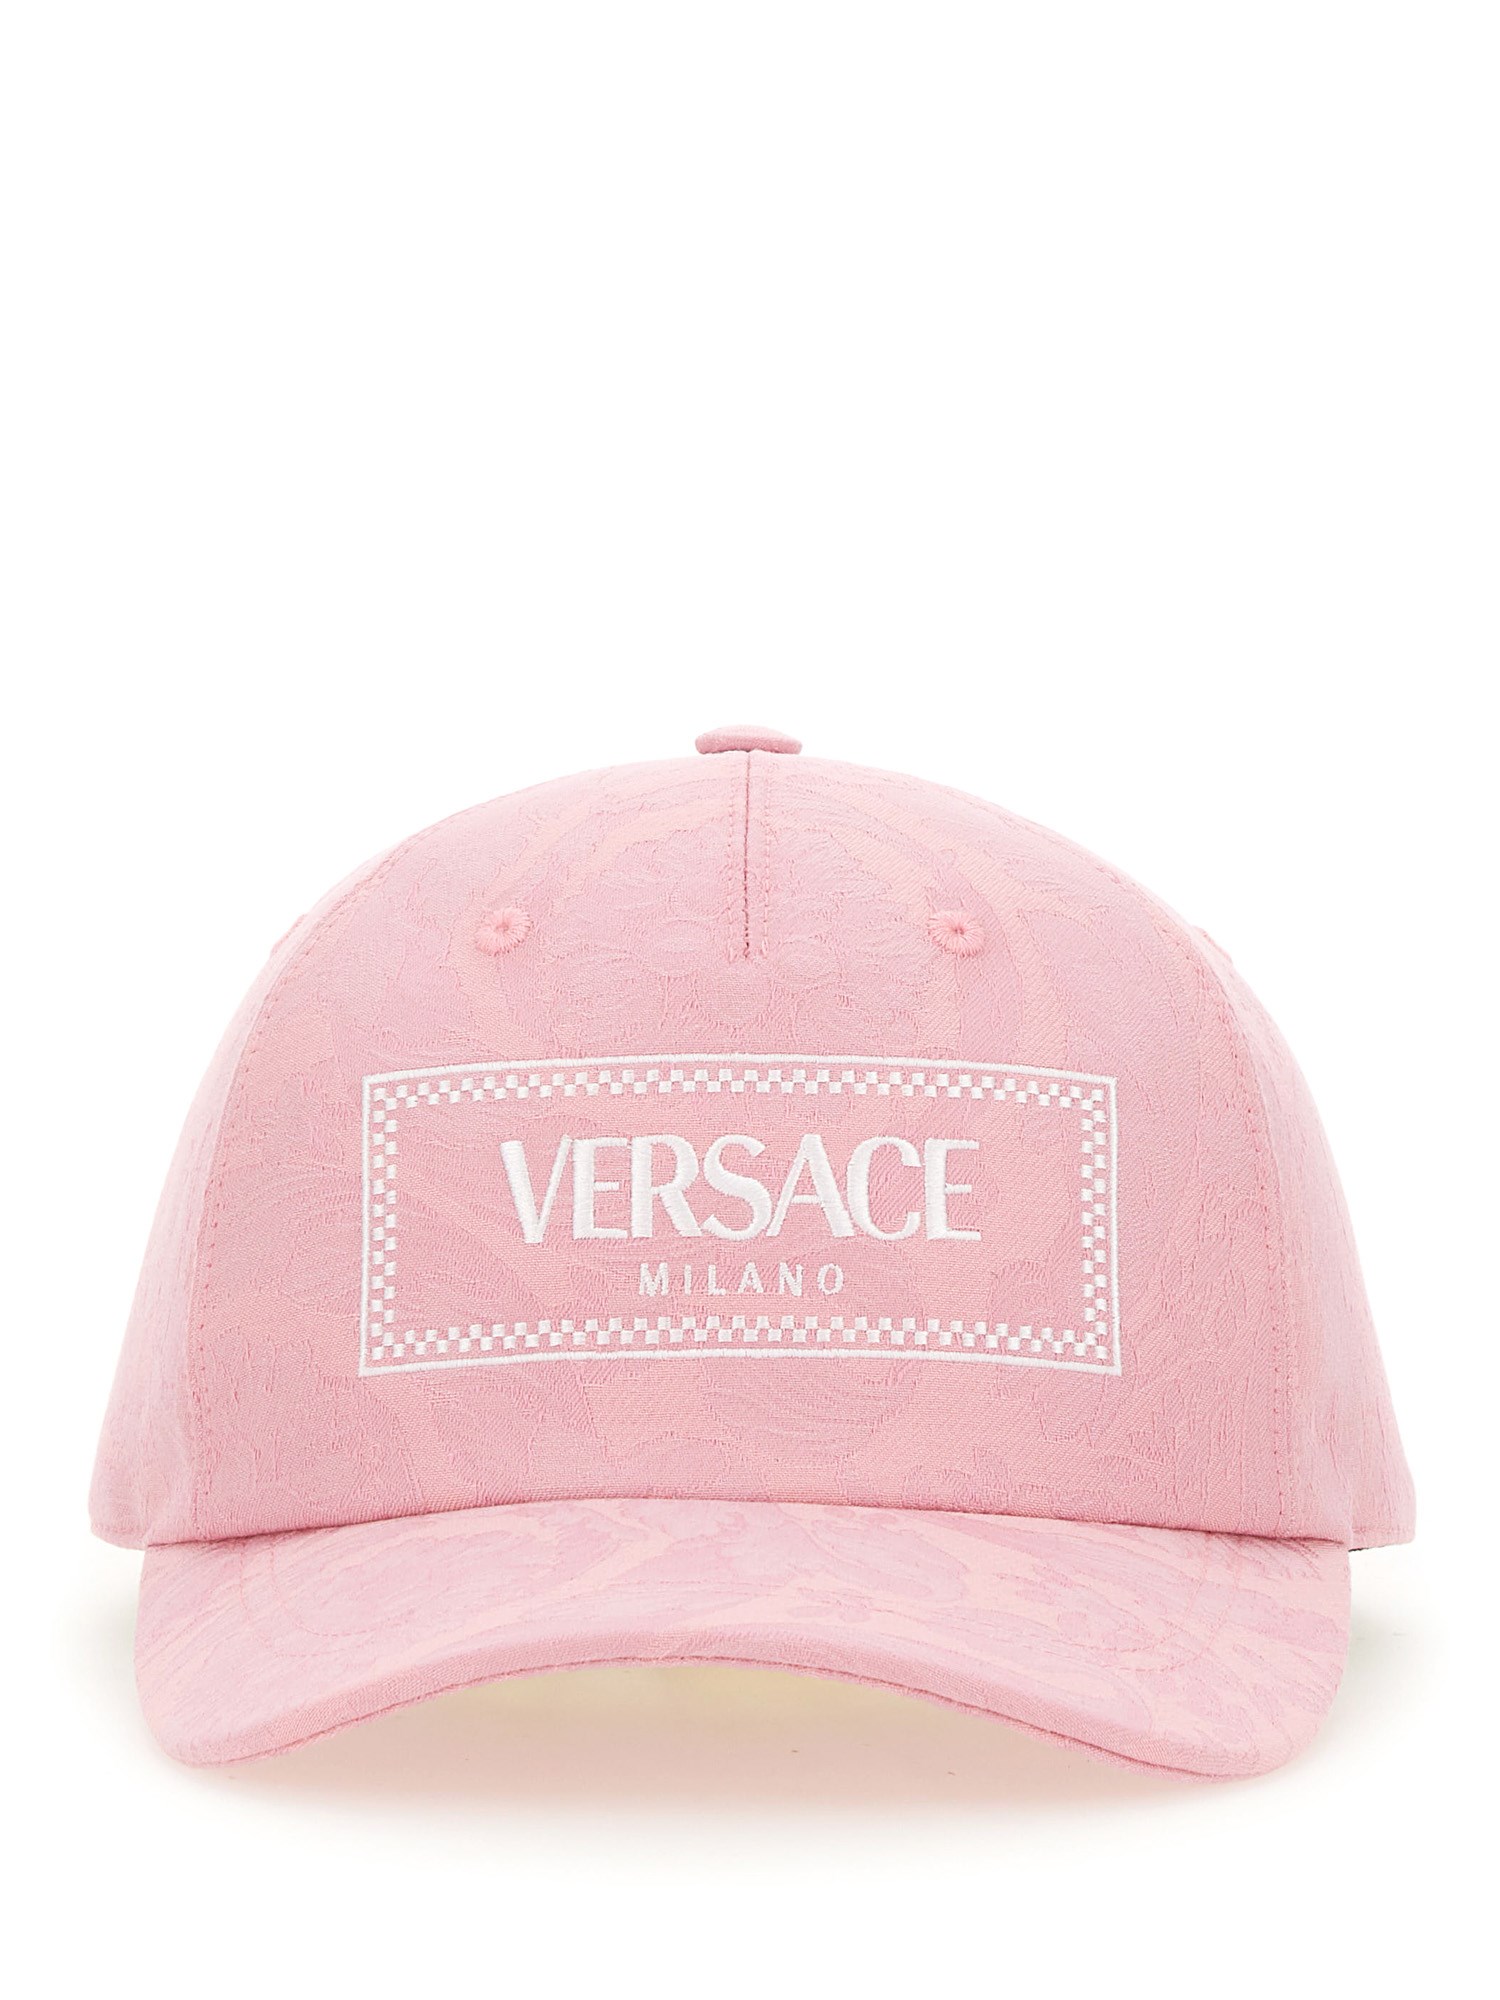 Versace versace baseball hat with logo